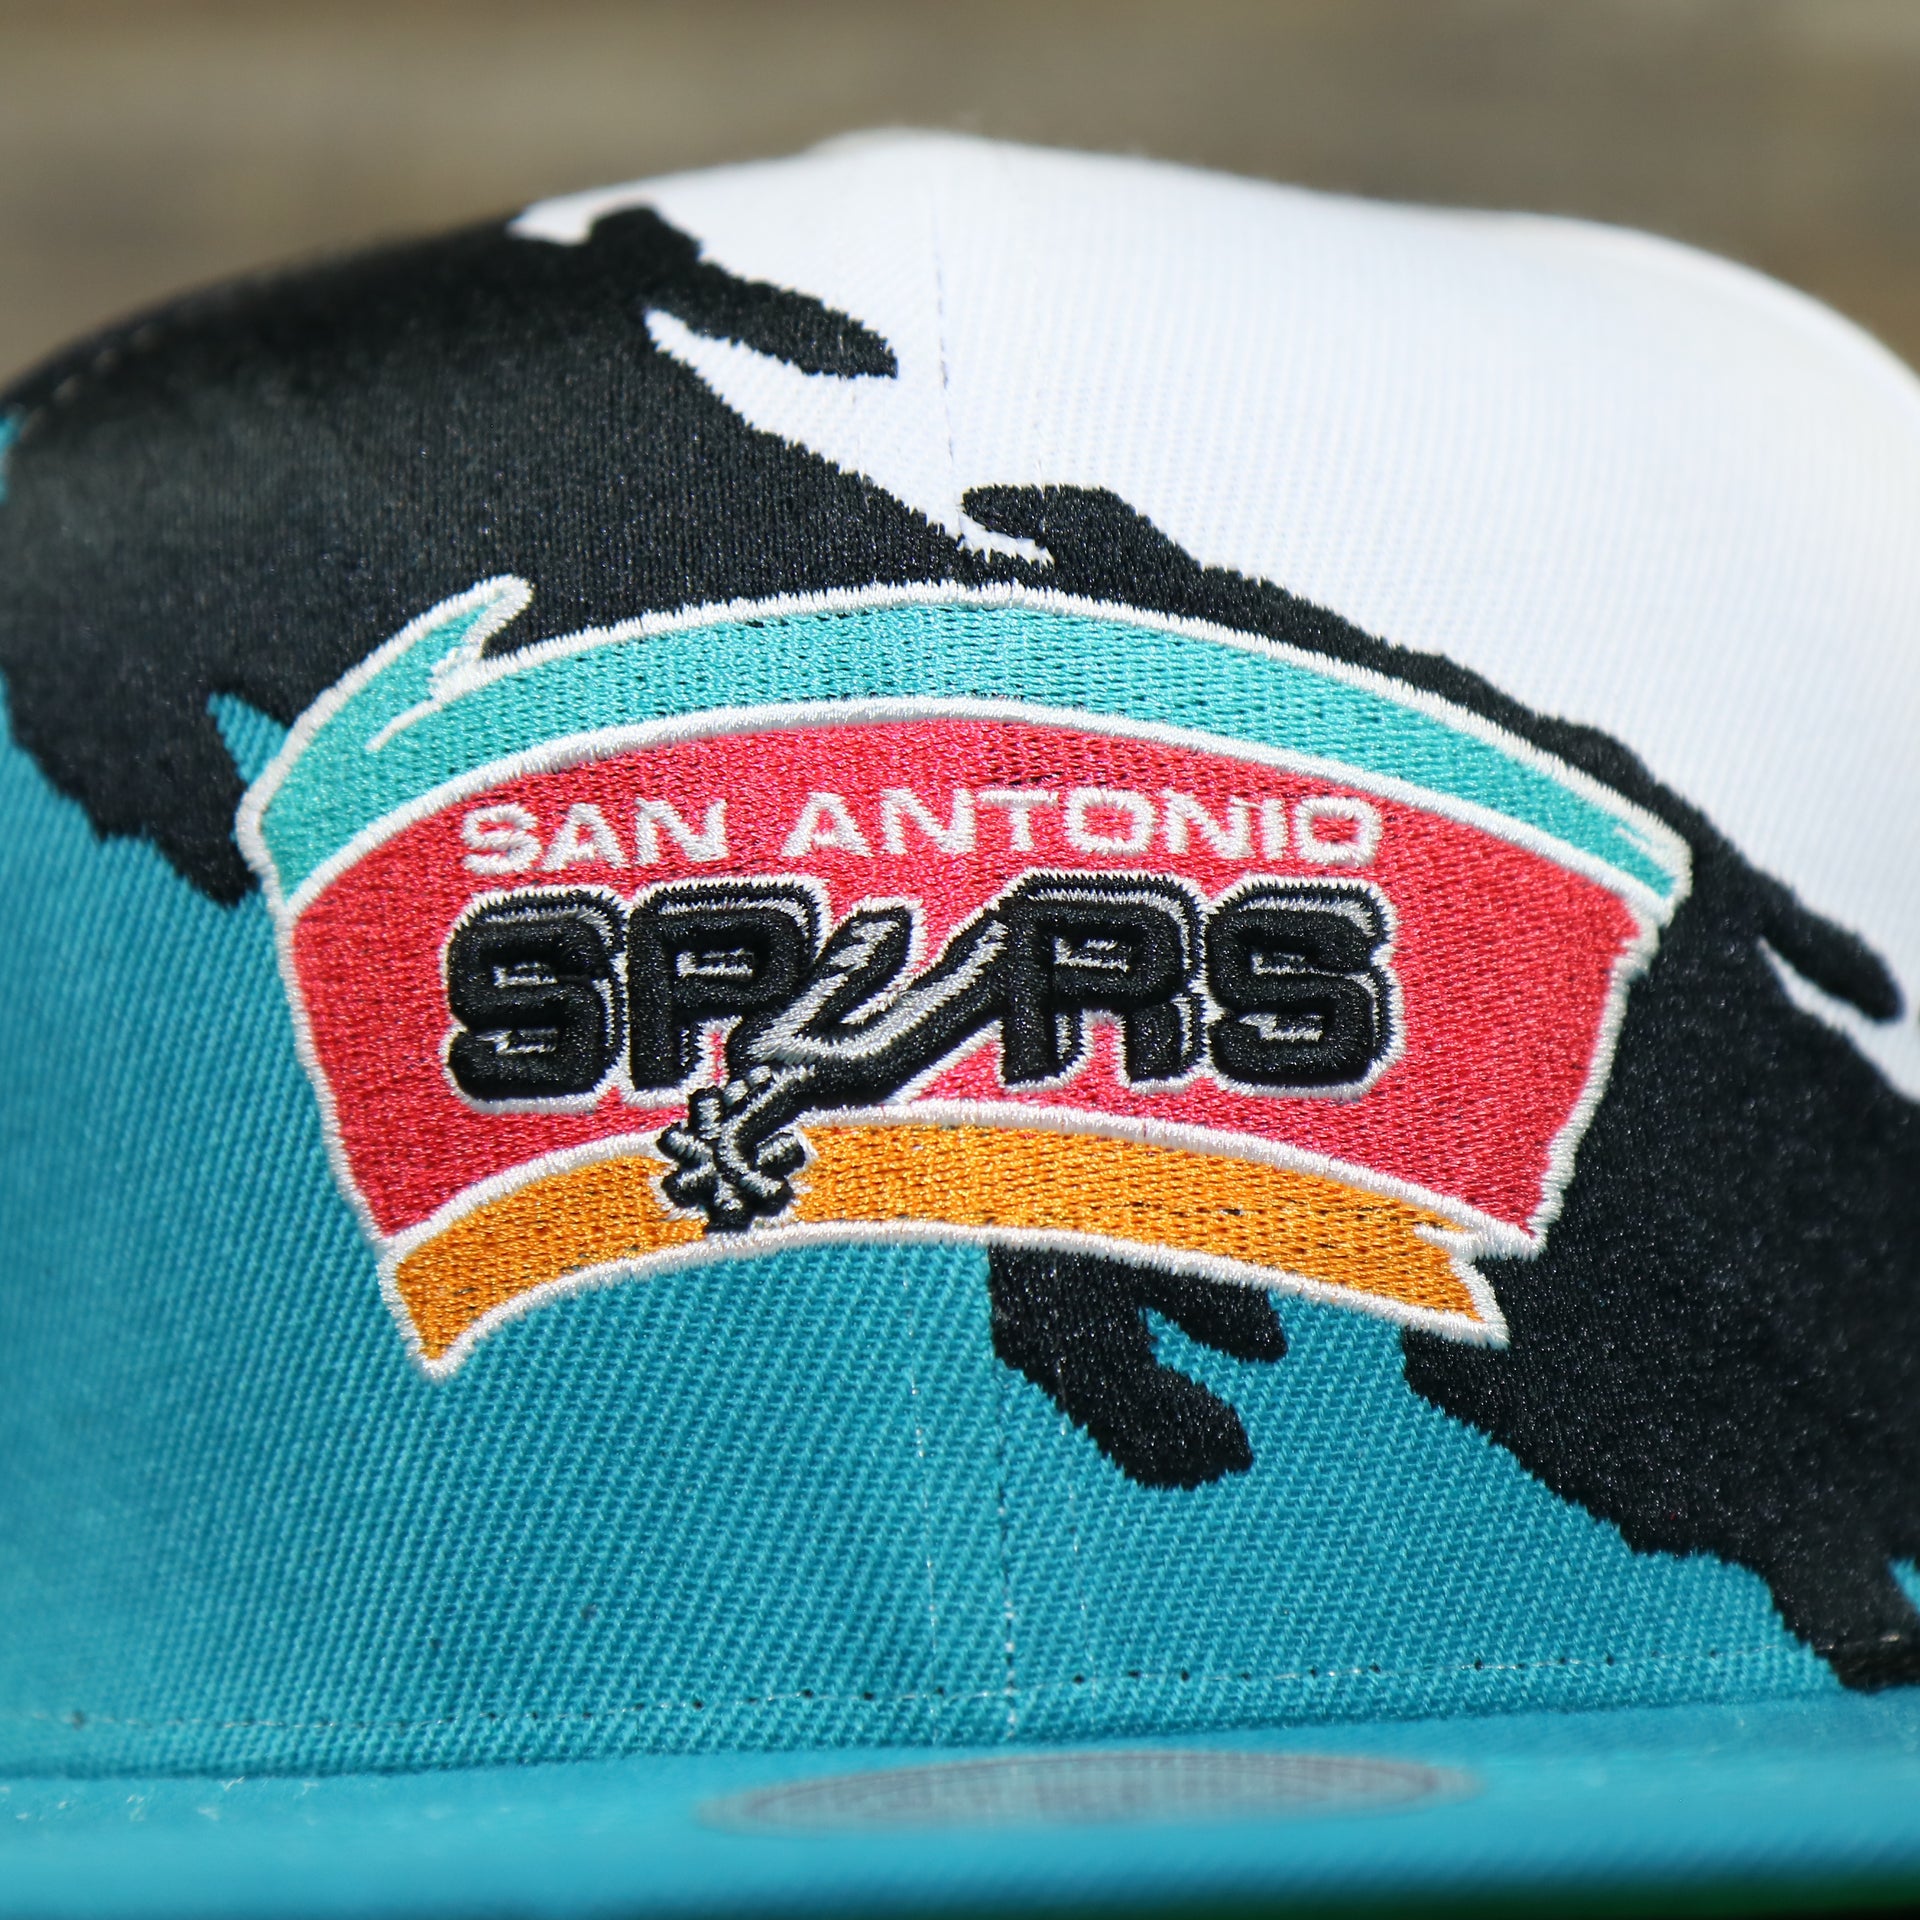 spurs logo on the San Antonio Spurs Vintage Retro NBA Paintbrush Mitchell and Ness Snapback Hat | Teal/White/Black